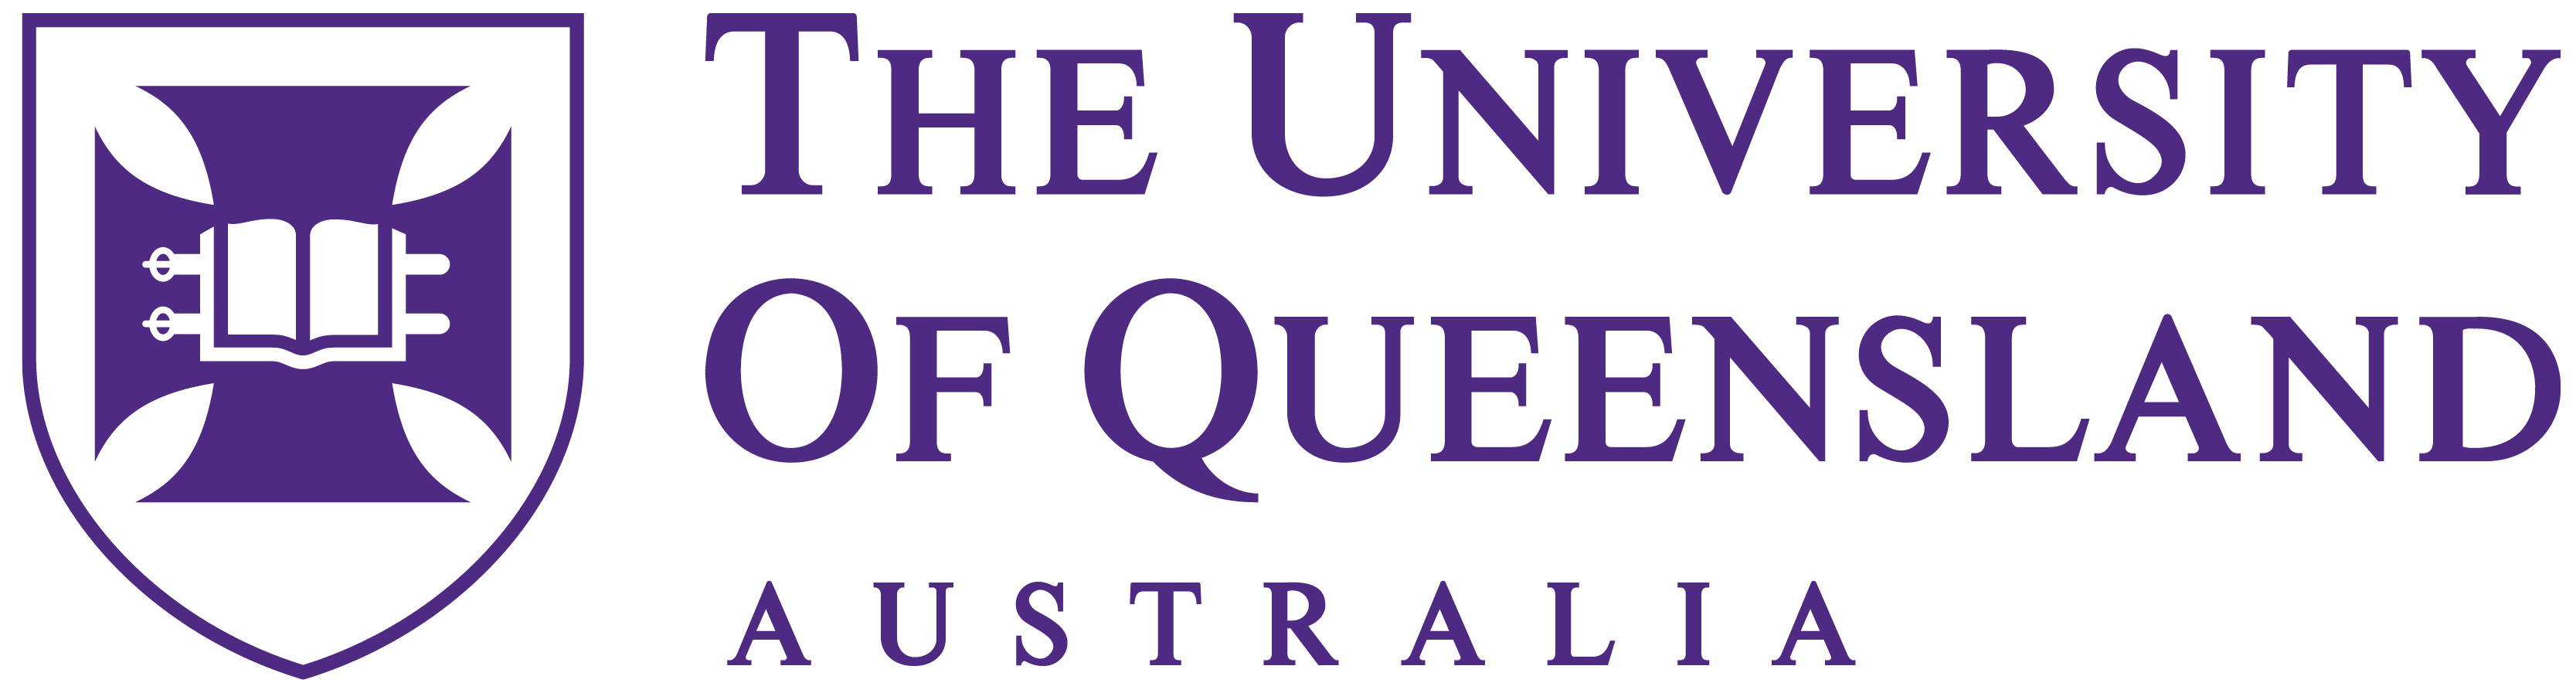 The University of Queensland logo reversed